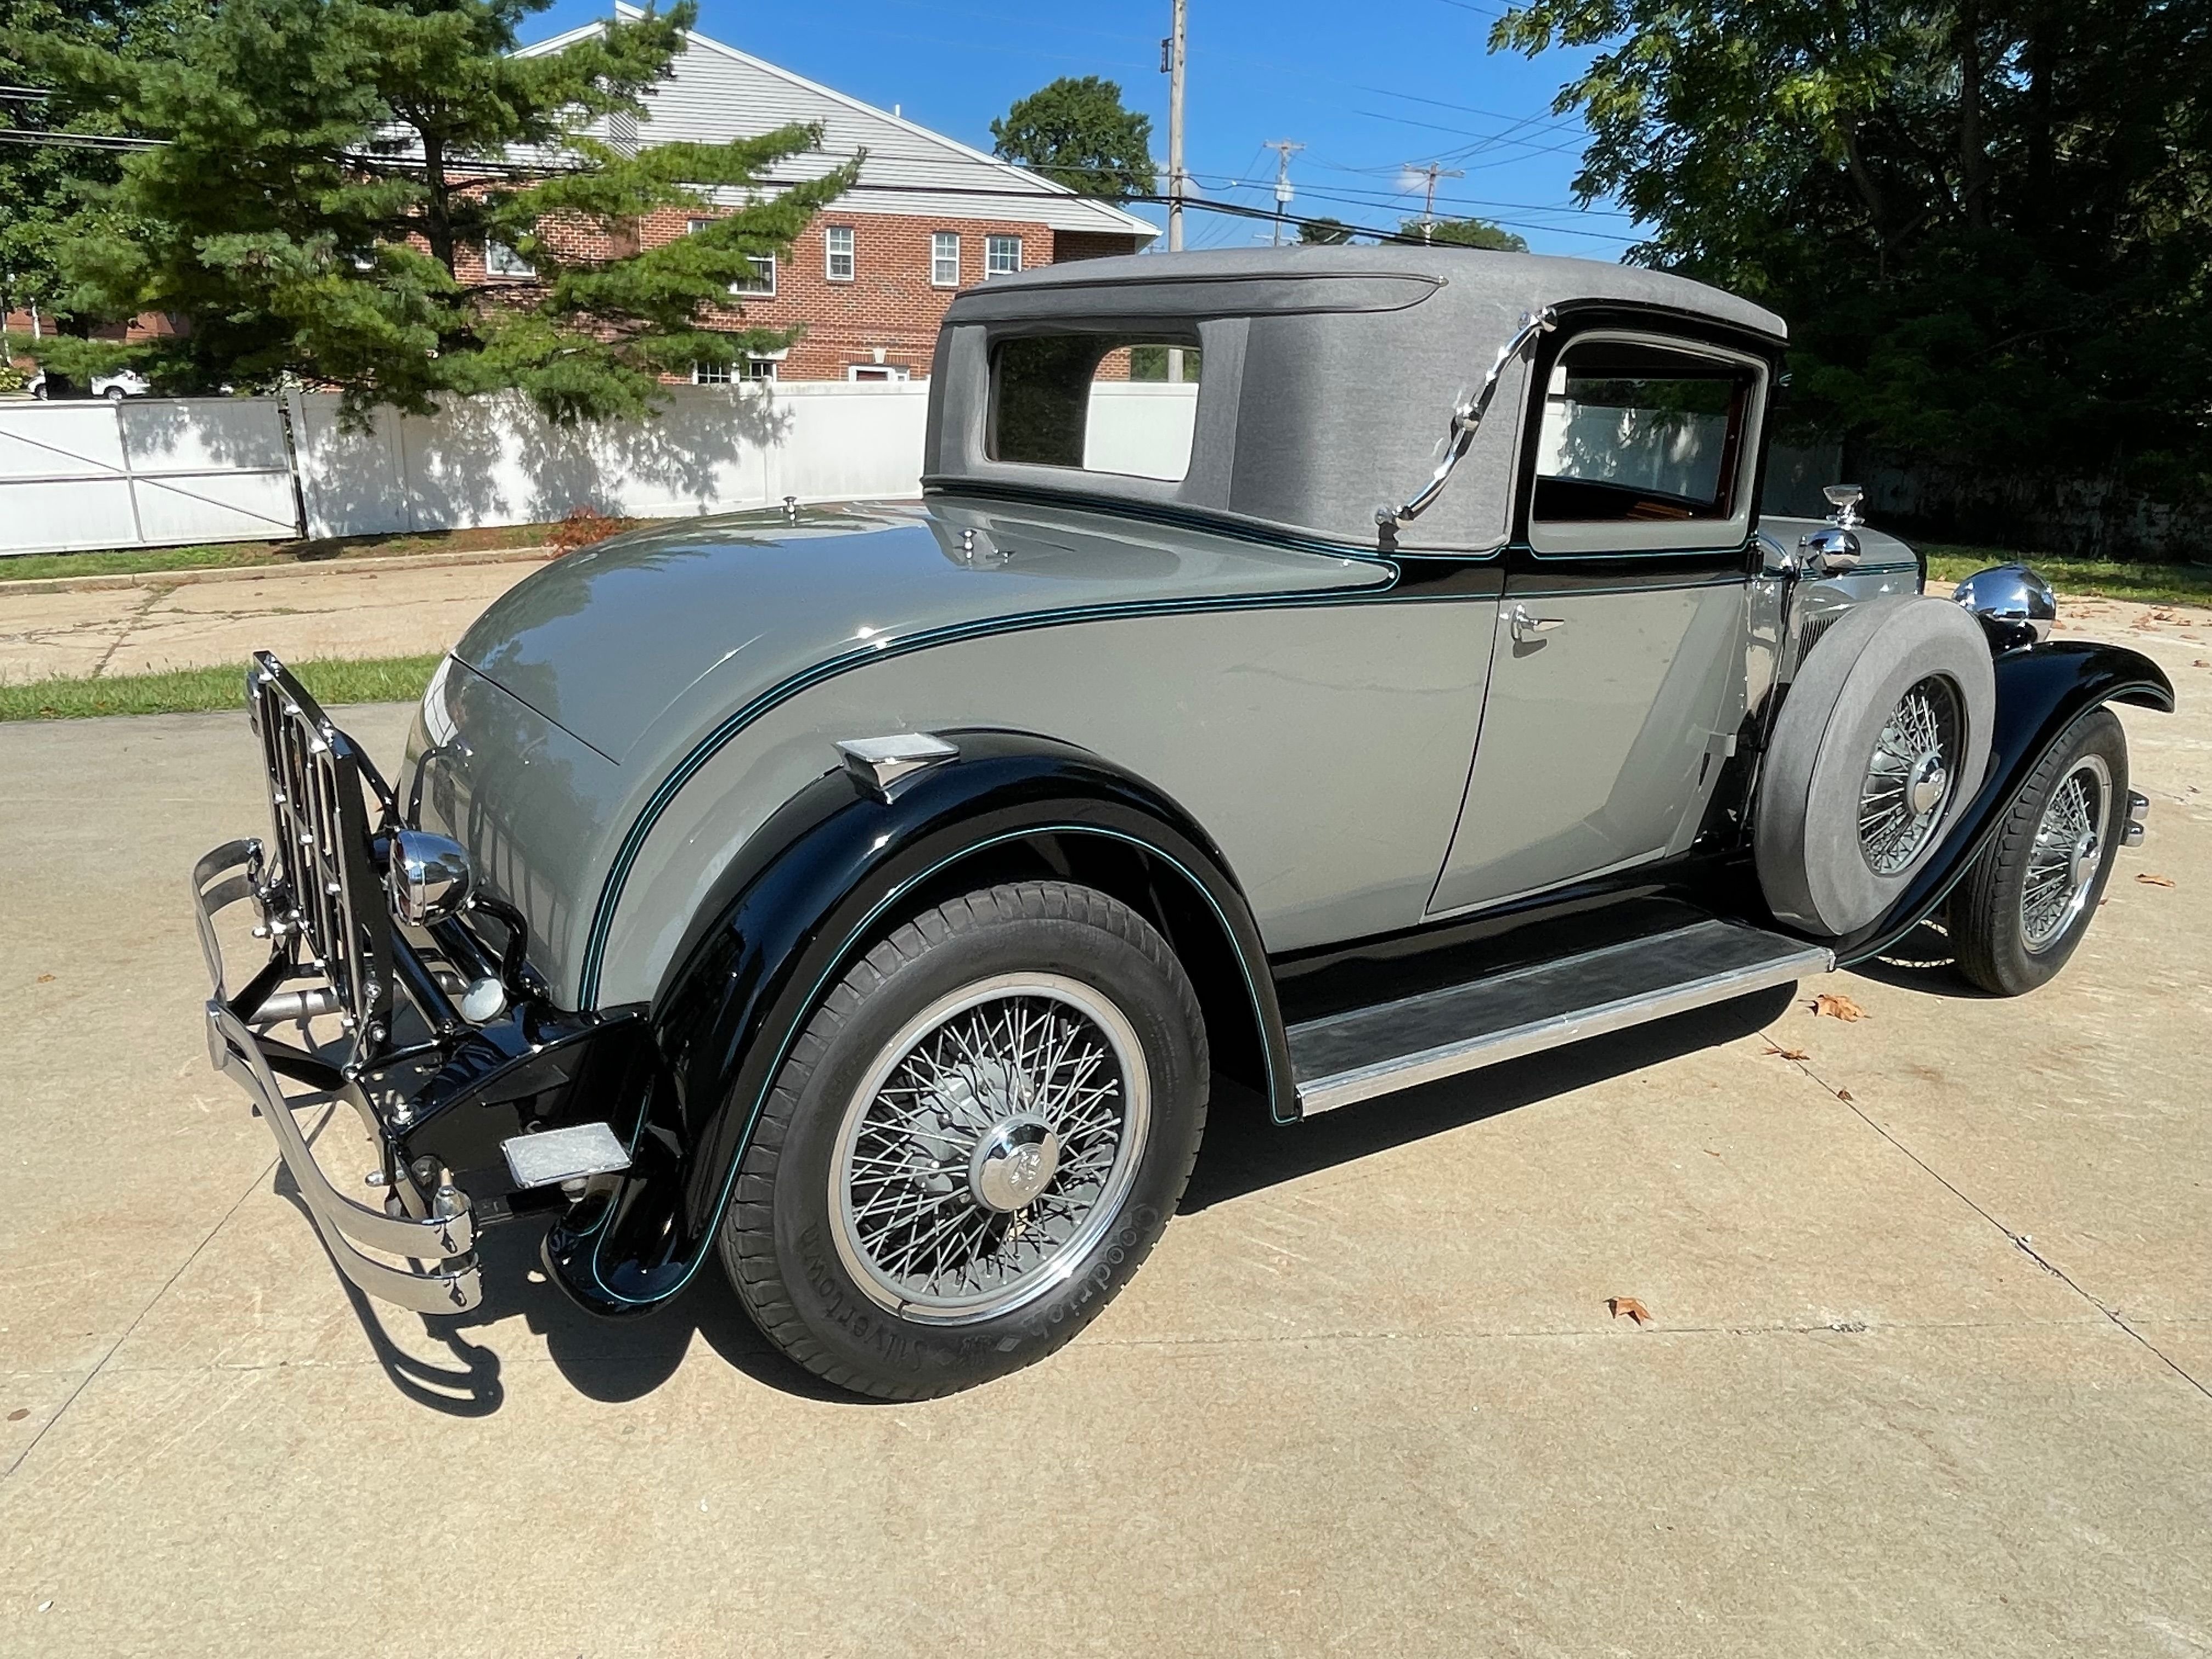 1929 Nash Advanced Six Model 460 Coupe